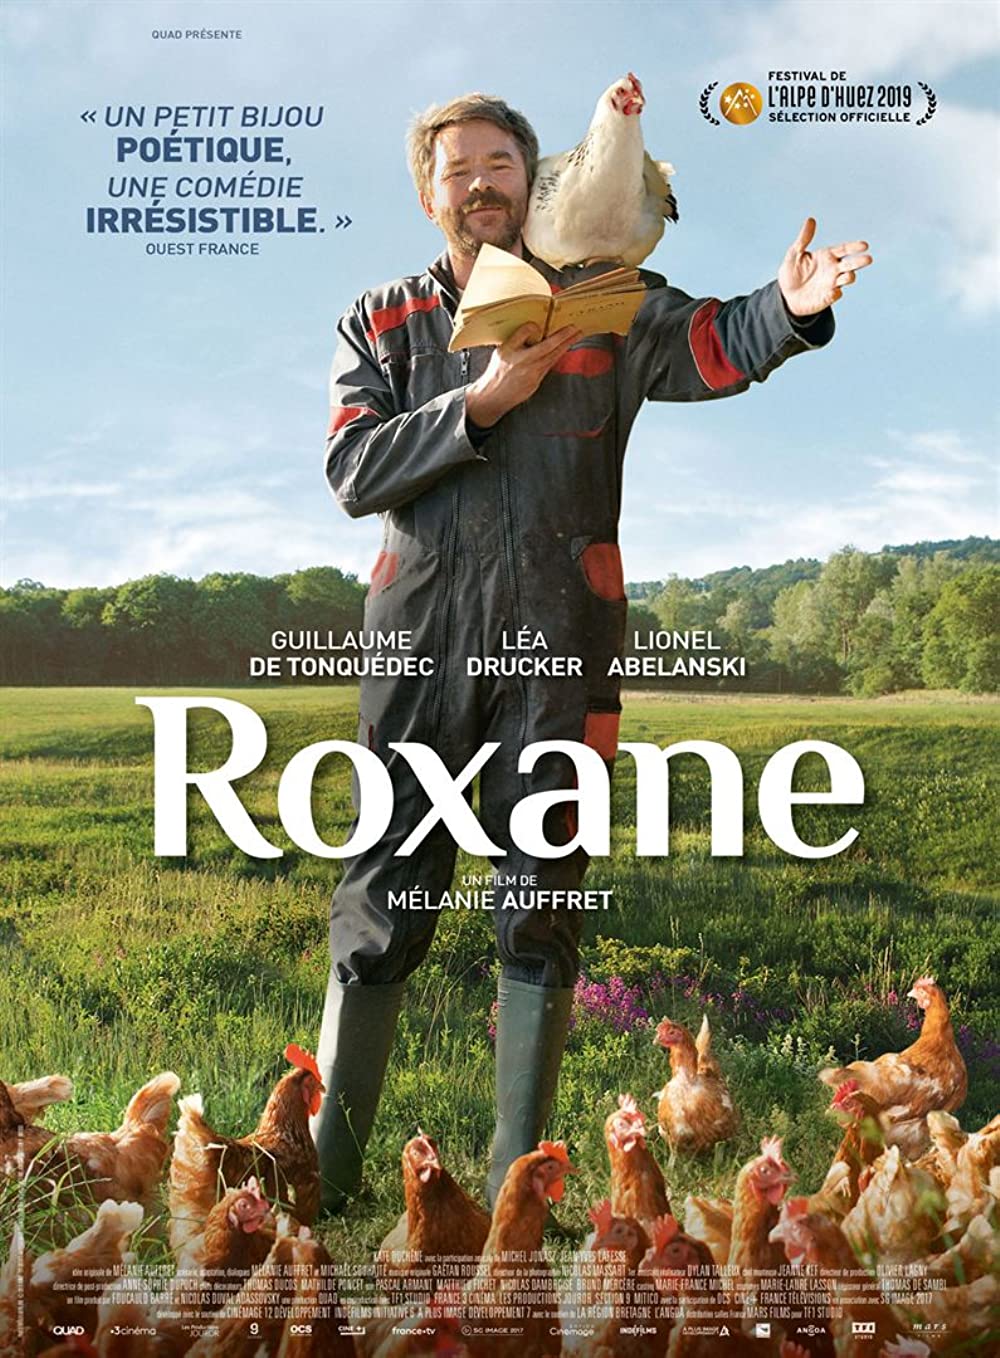 Filmbeschreibung zu Roxane